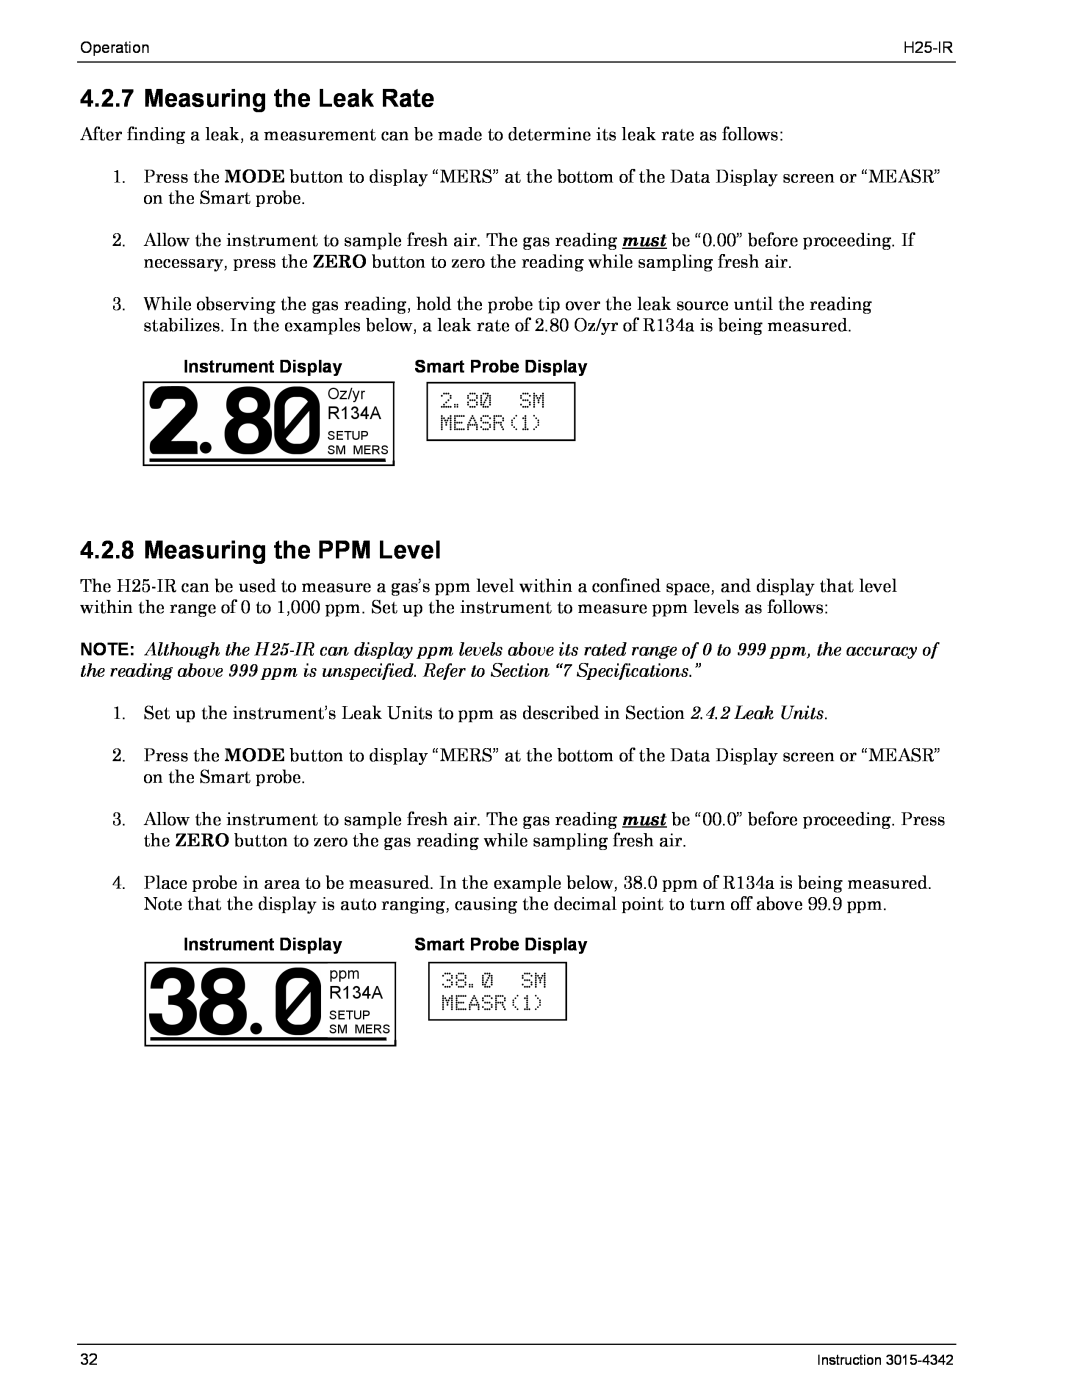 Bacharach H25-IR manual Measuring the Leak Rate, Measuring the PPM Level, 2.80SM MEASR1, 38.0SM MEASR1, R134A 